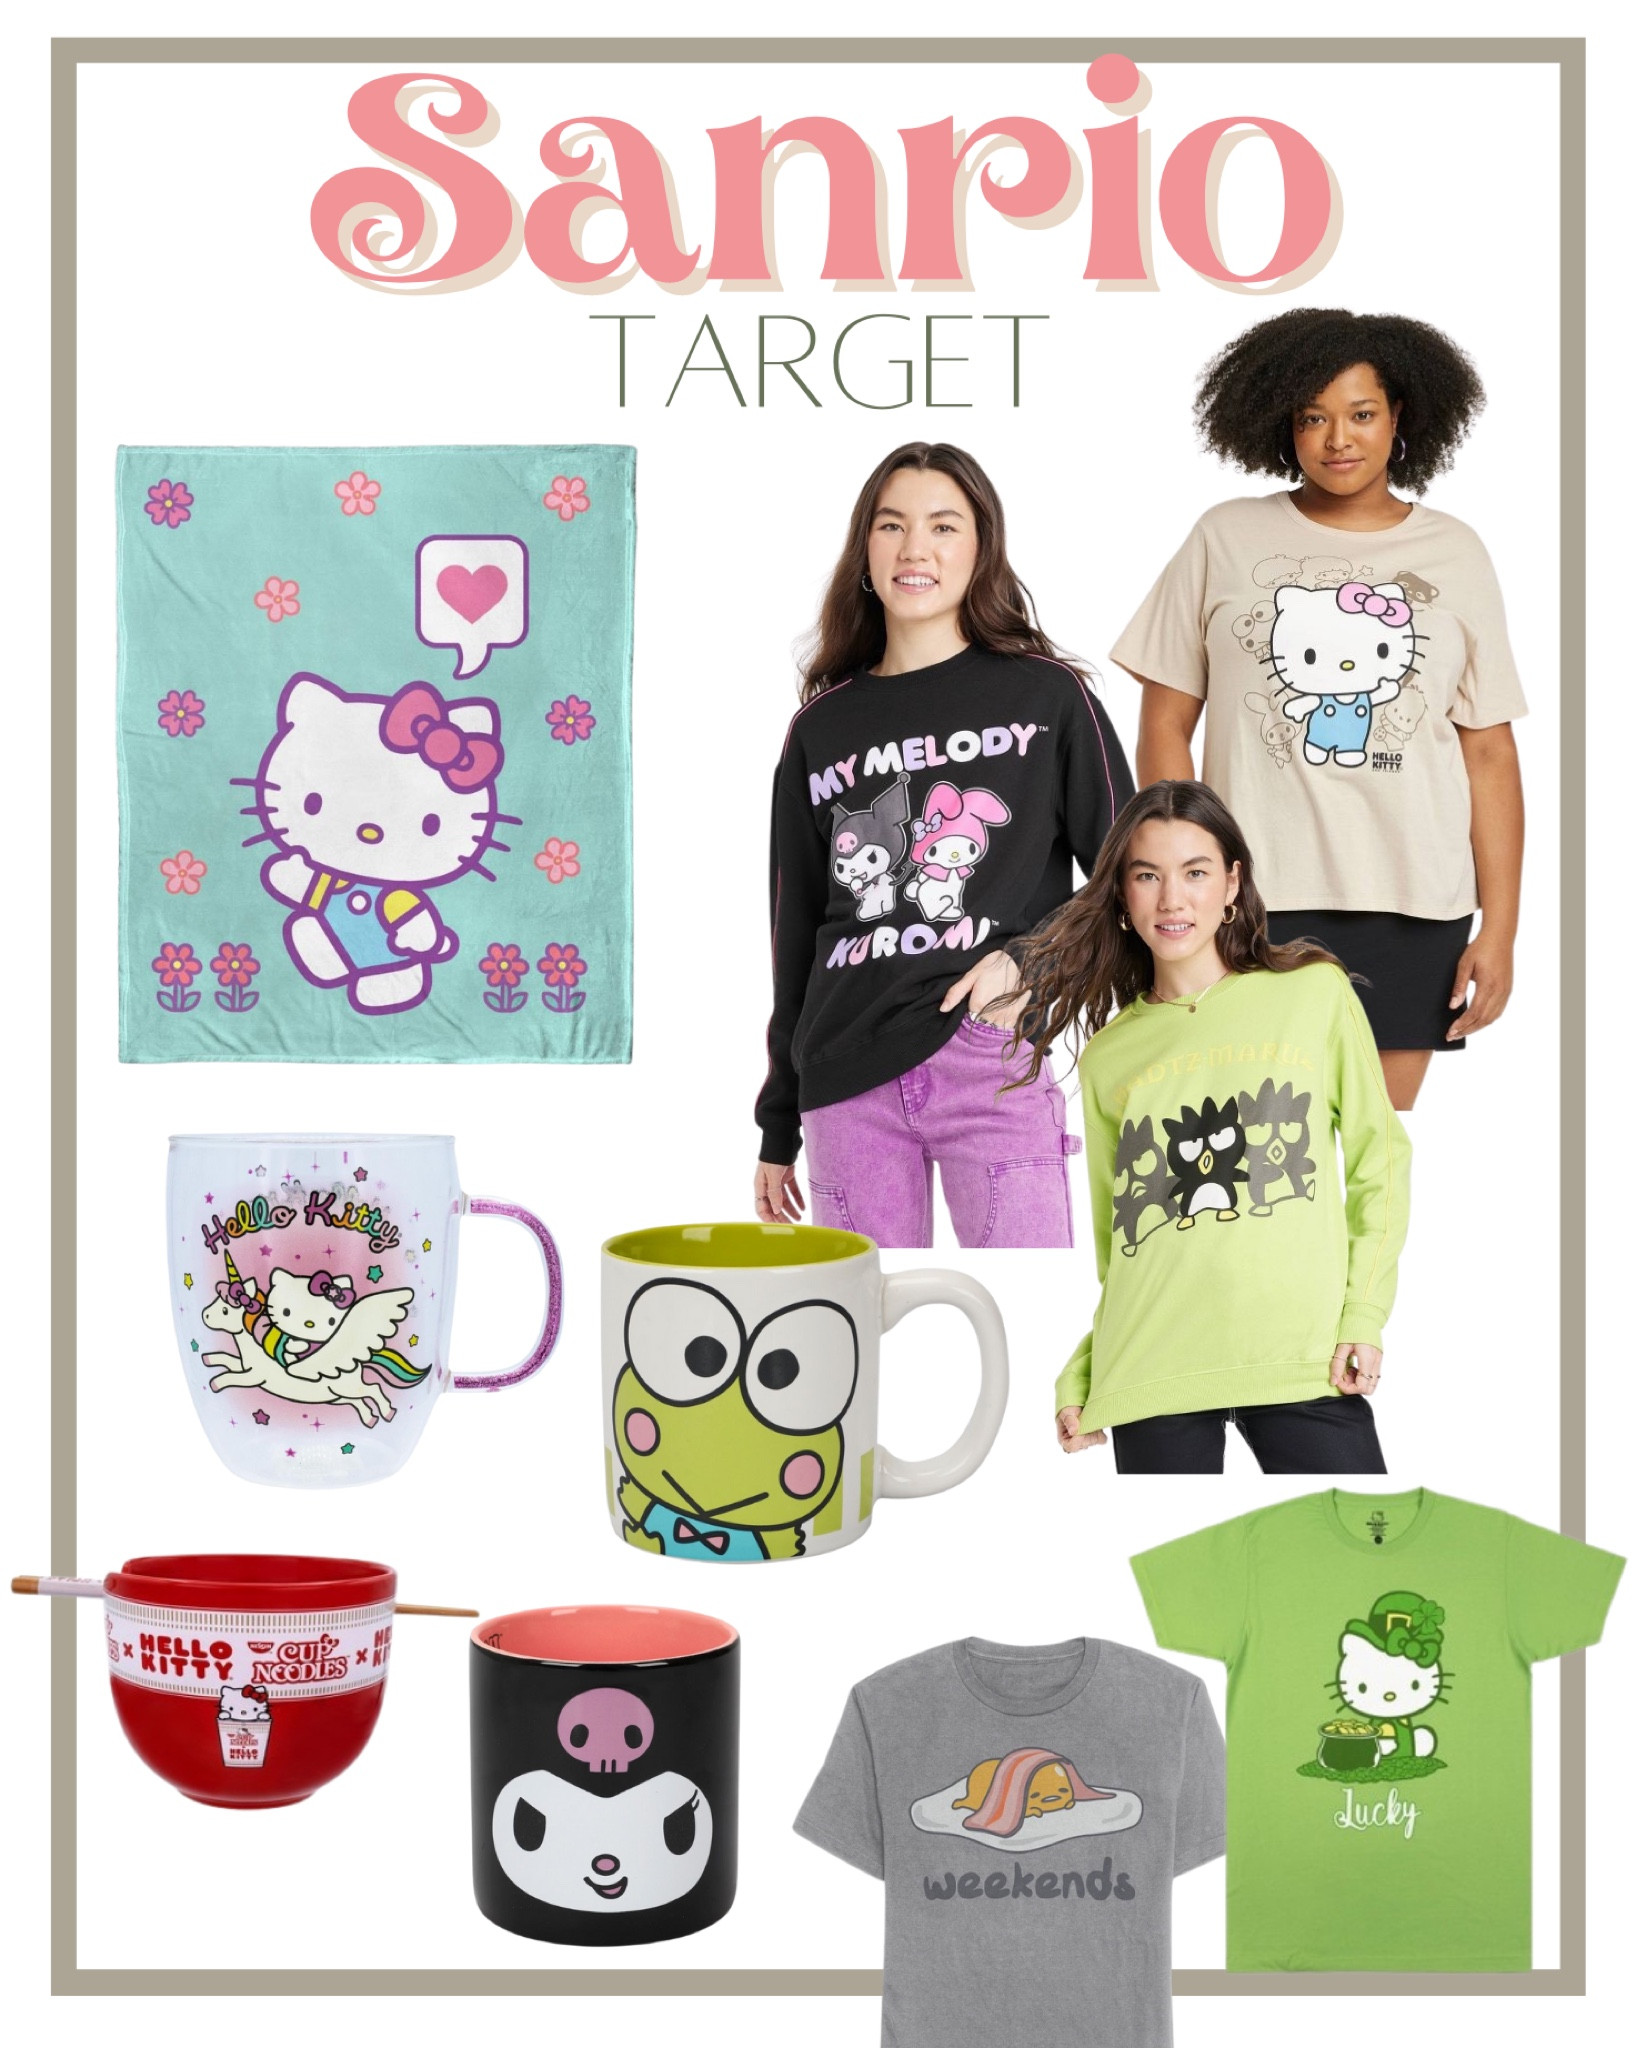 Men's Hello Kitty Short Sleeve Graphic T-shirt - Heathered Gray : Target